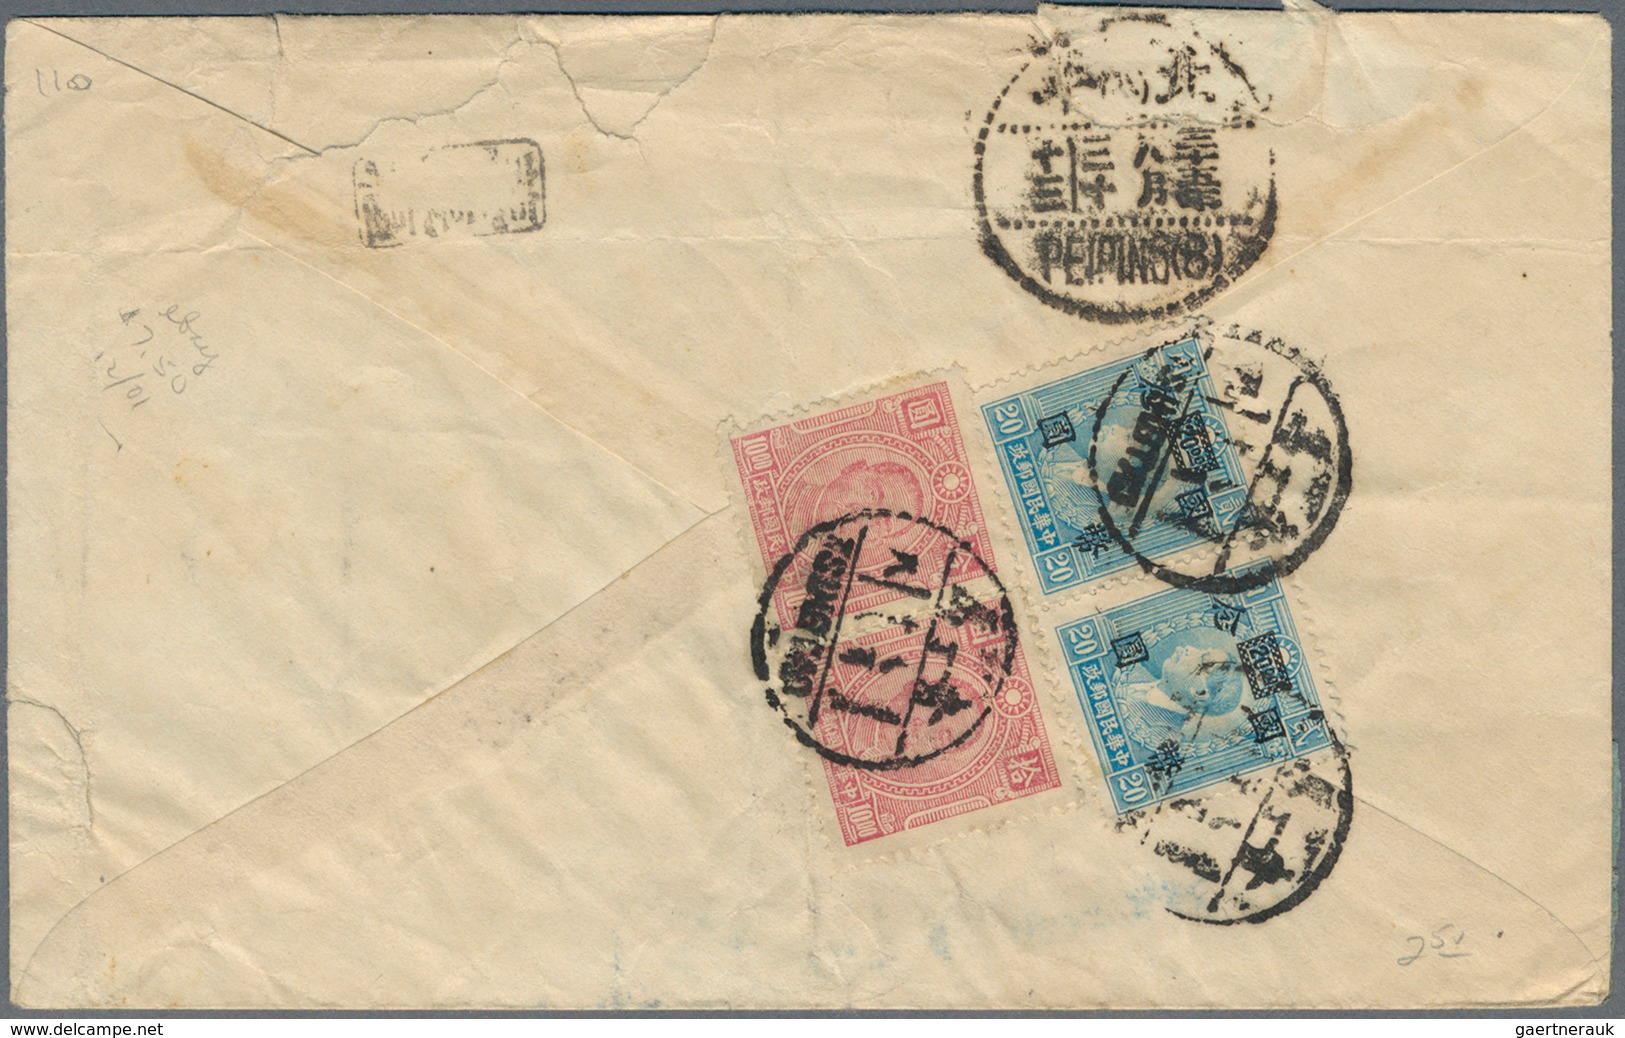 Japanische Post in China: 1914/22, I.J.P.O. Tsingtau: Tazawa 3 S. tied native style "Tsingtau 11.1.2